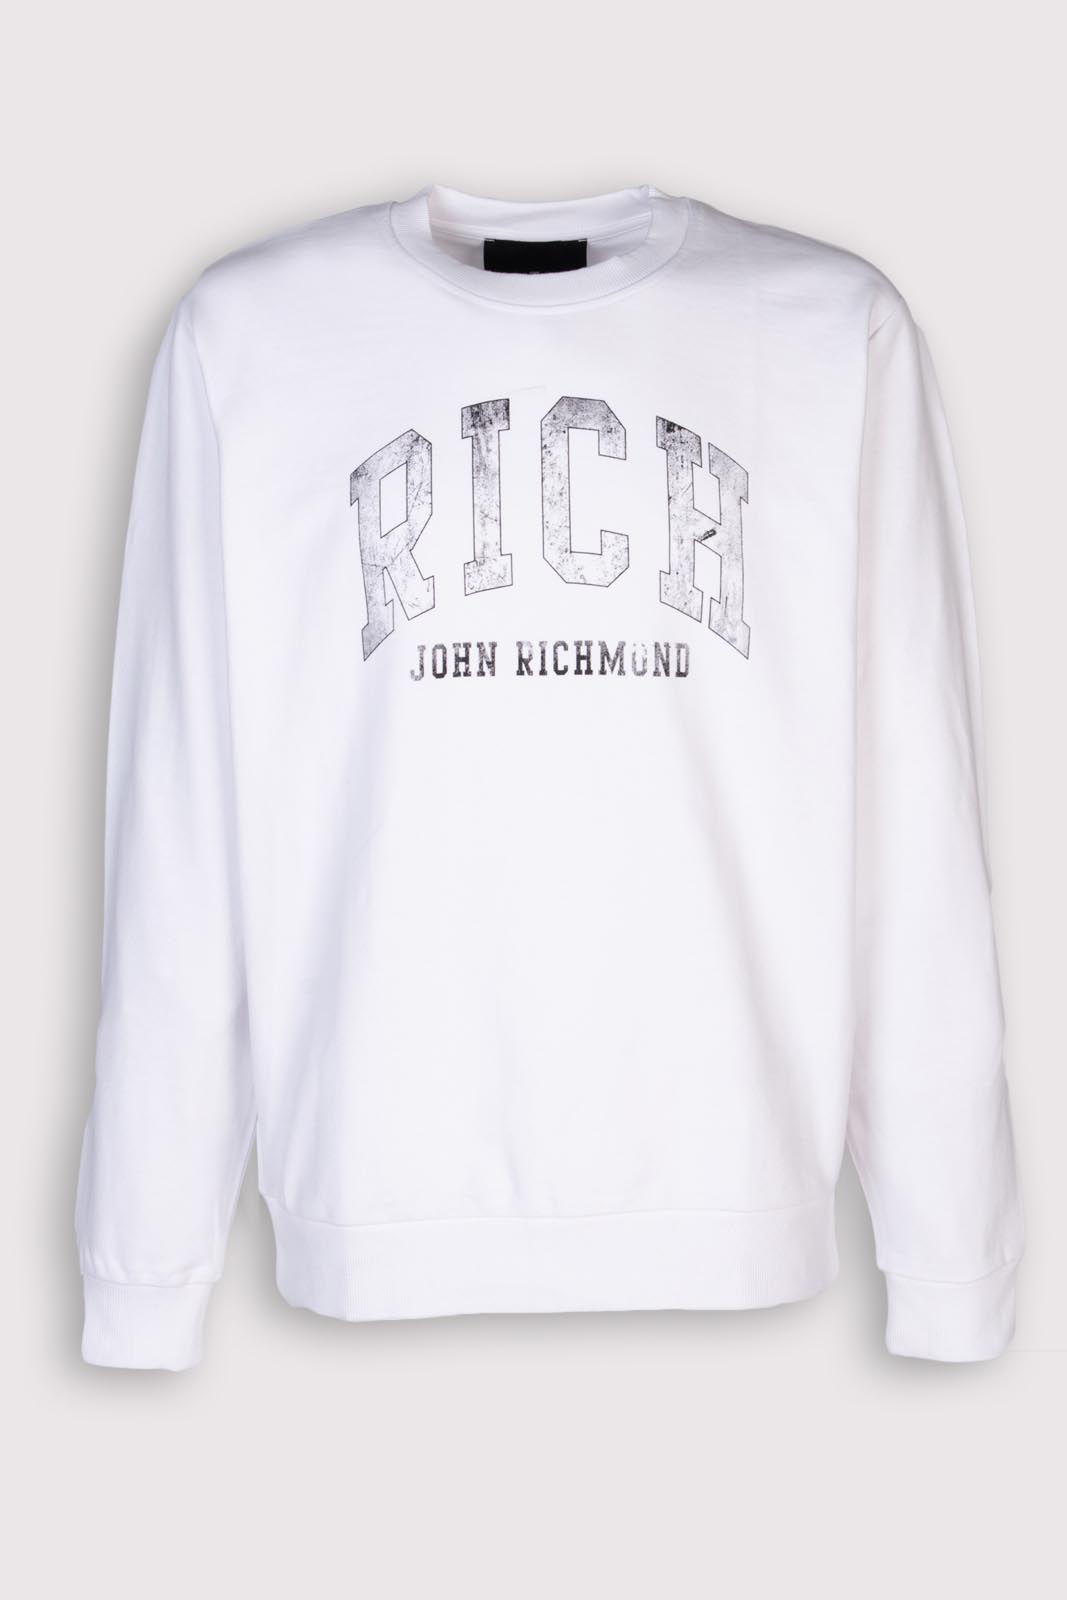 JOHN RICHMOND Pullover Sweatshirt Size L Faded Effect Logo 'RICH' Long Sleeve gallery main photo